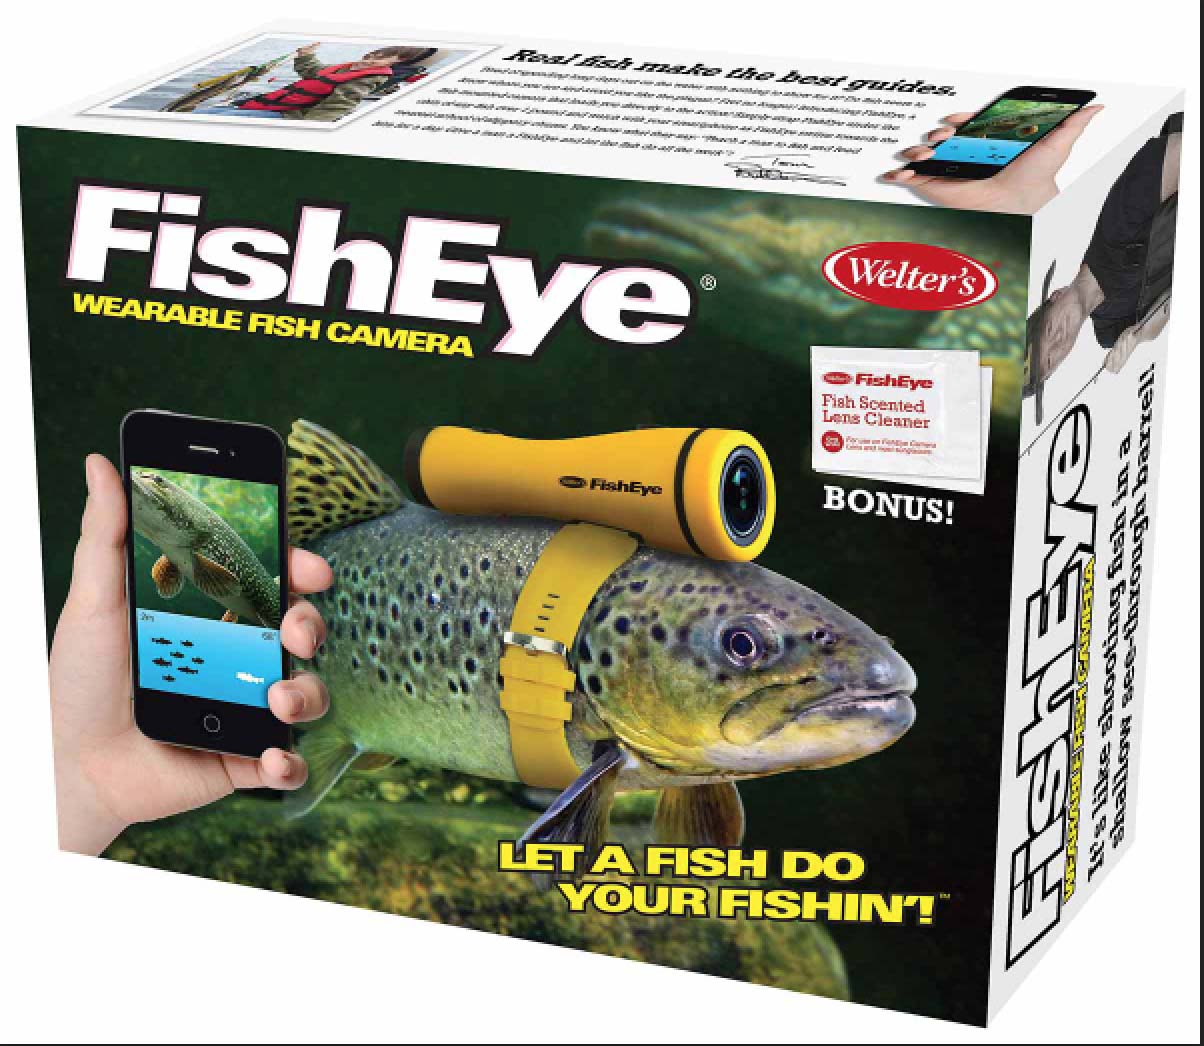 FishEye-wearable-fish-camera-1.jpg